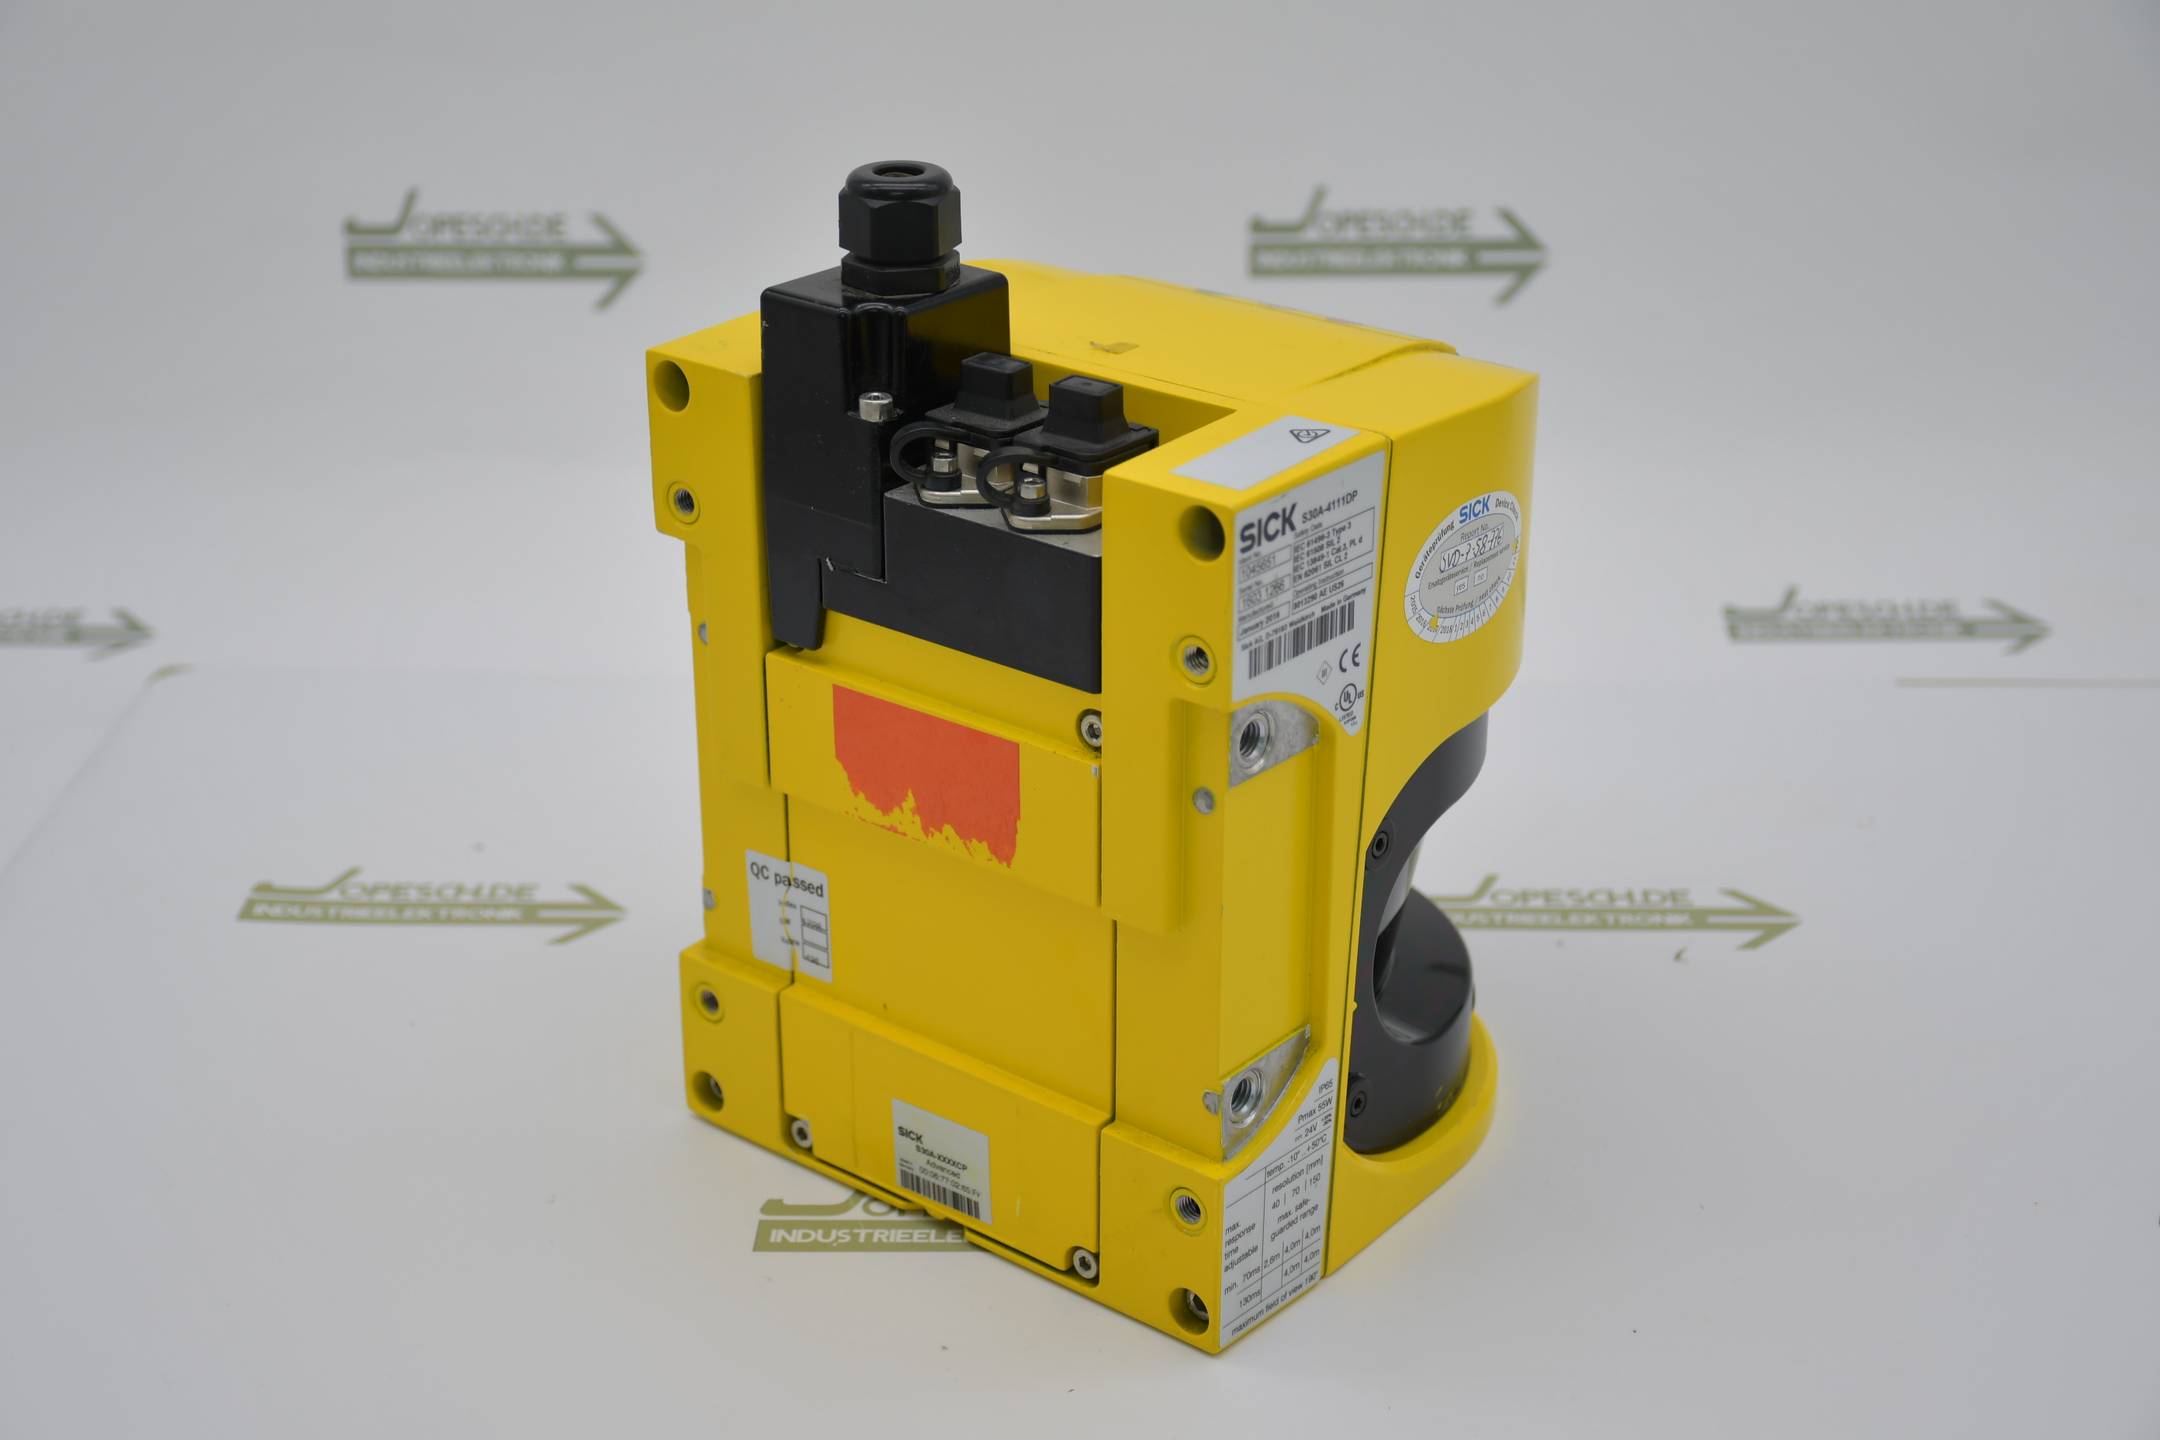 SICK Safety Laser scanner S3000 PROFINET IO Professional S30A-4111DP ( 1045651 )